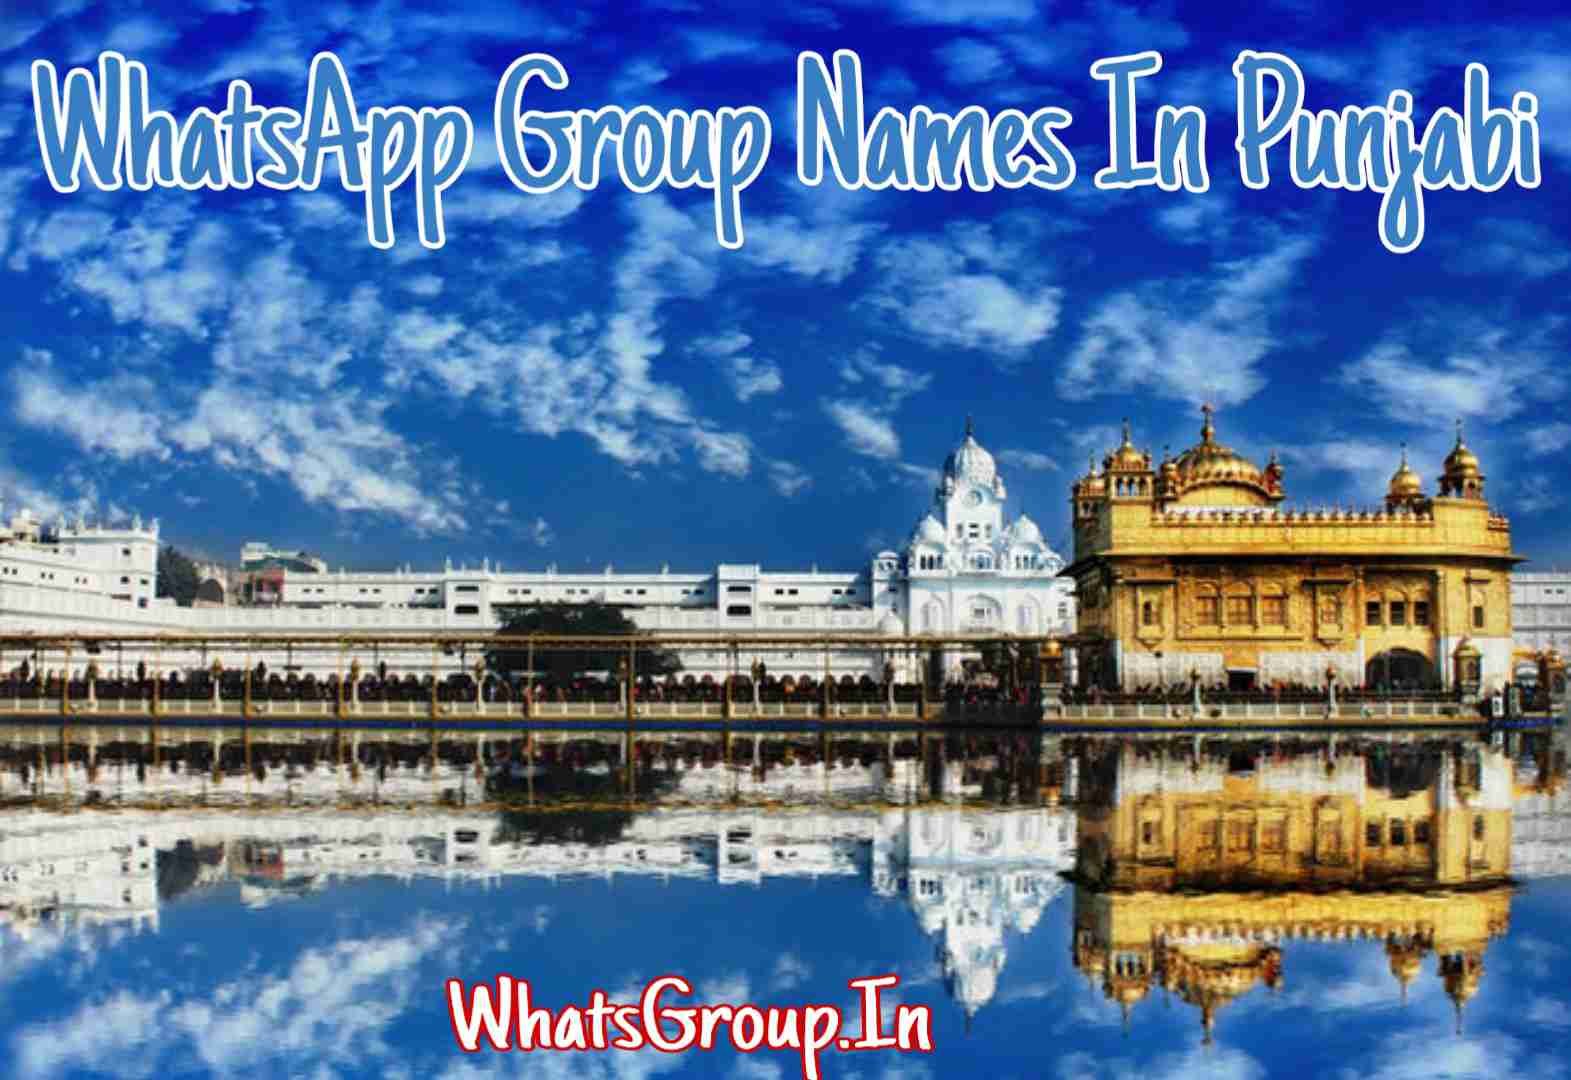 WhatsApp Group Names In Punjabi